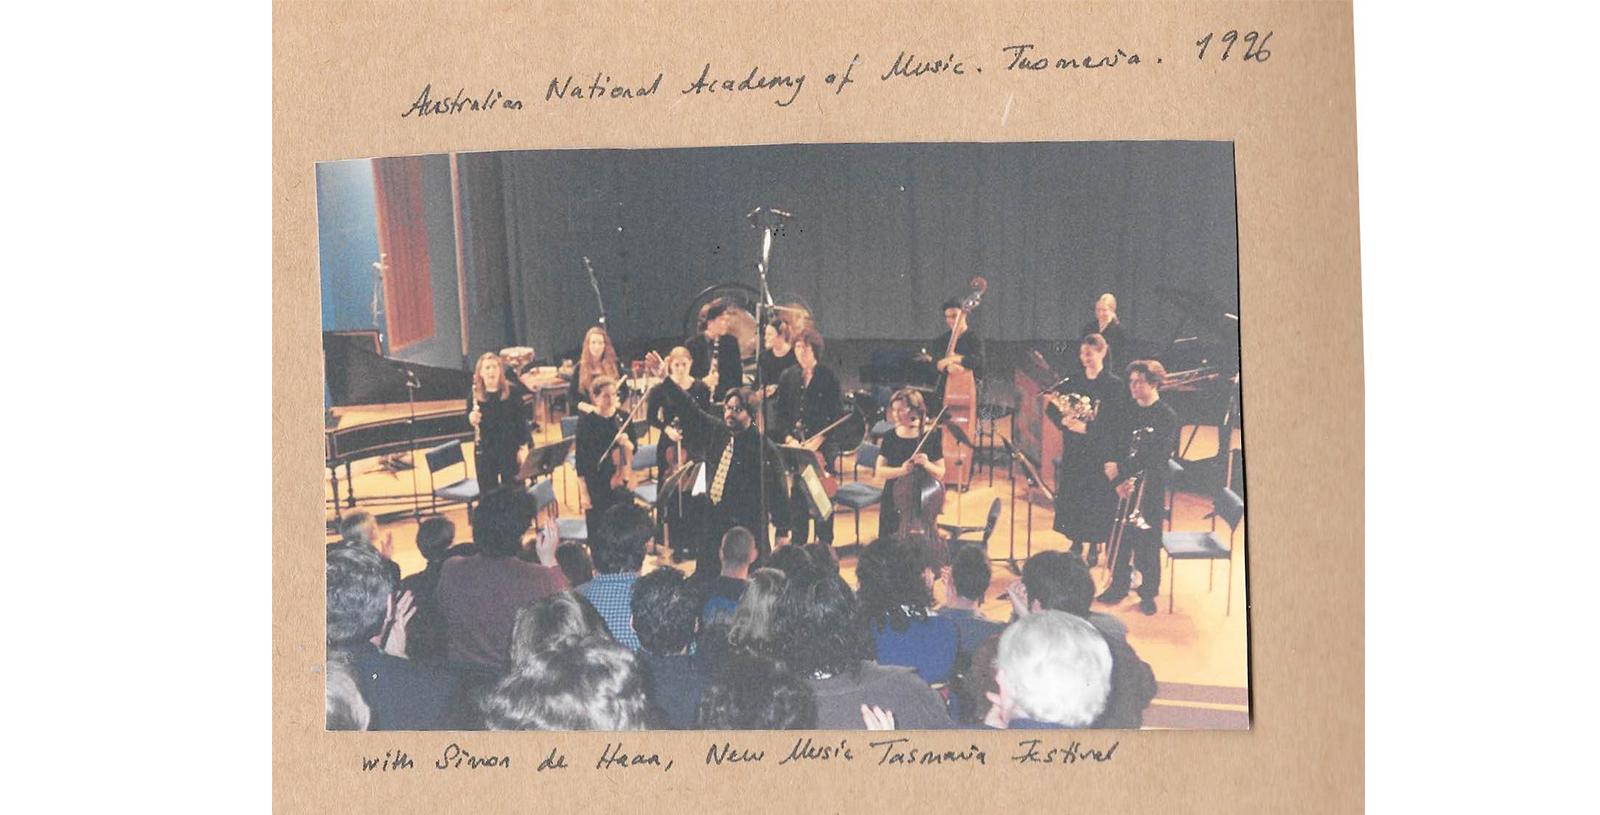 New Music Tasmania Festival (1996) 4 of 4